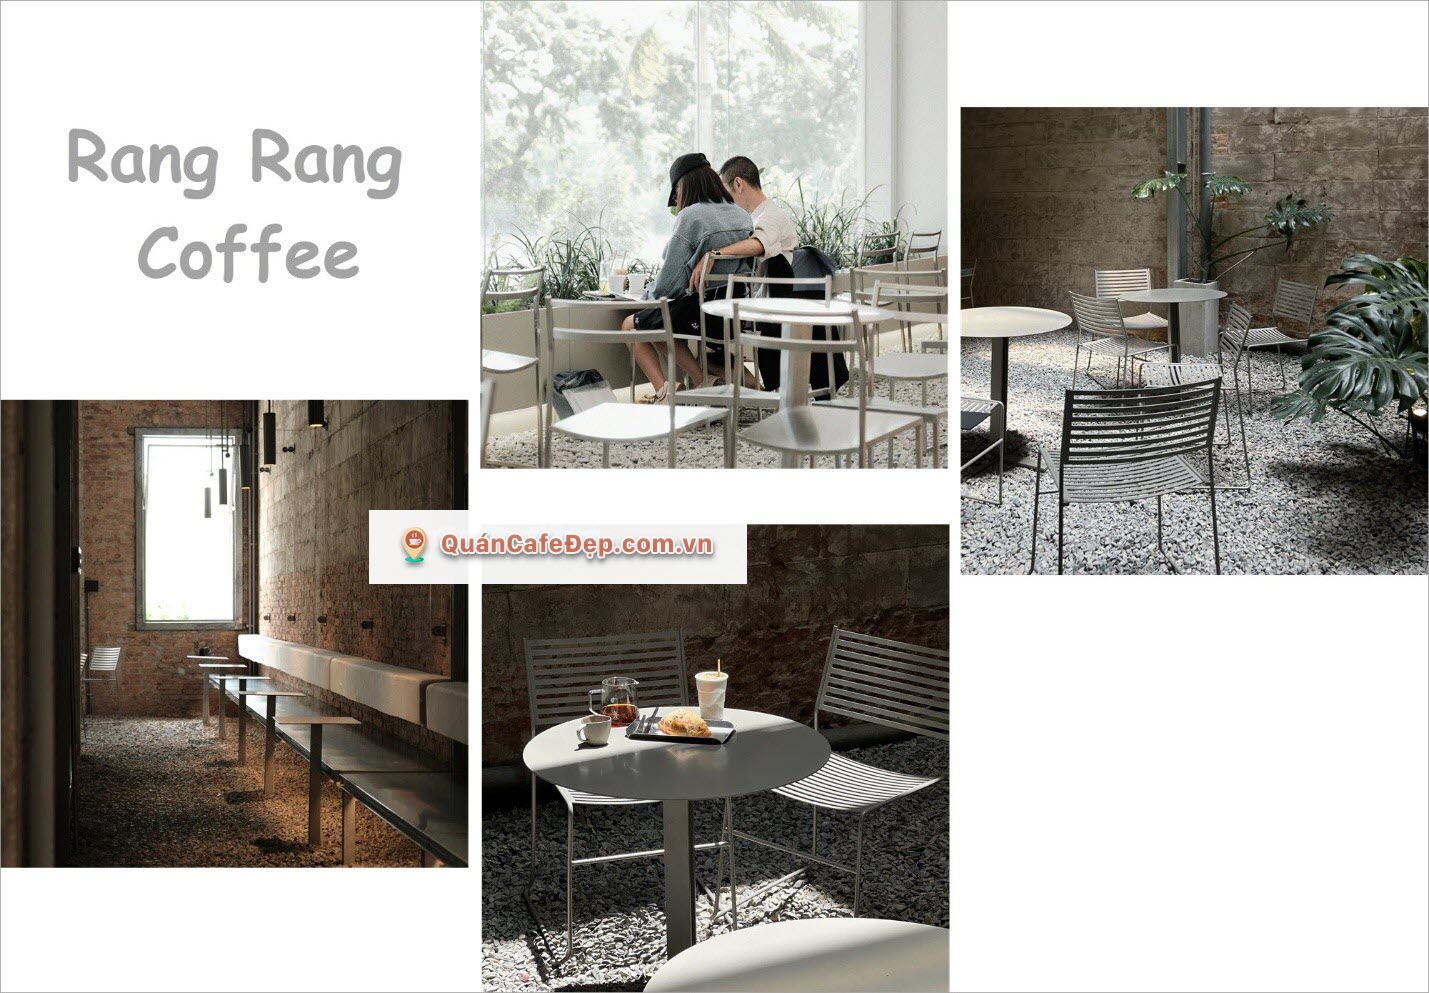 Rang Rang Coffee